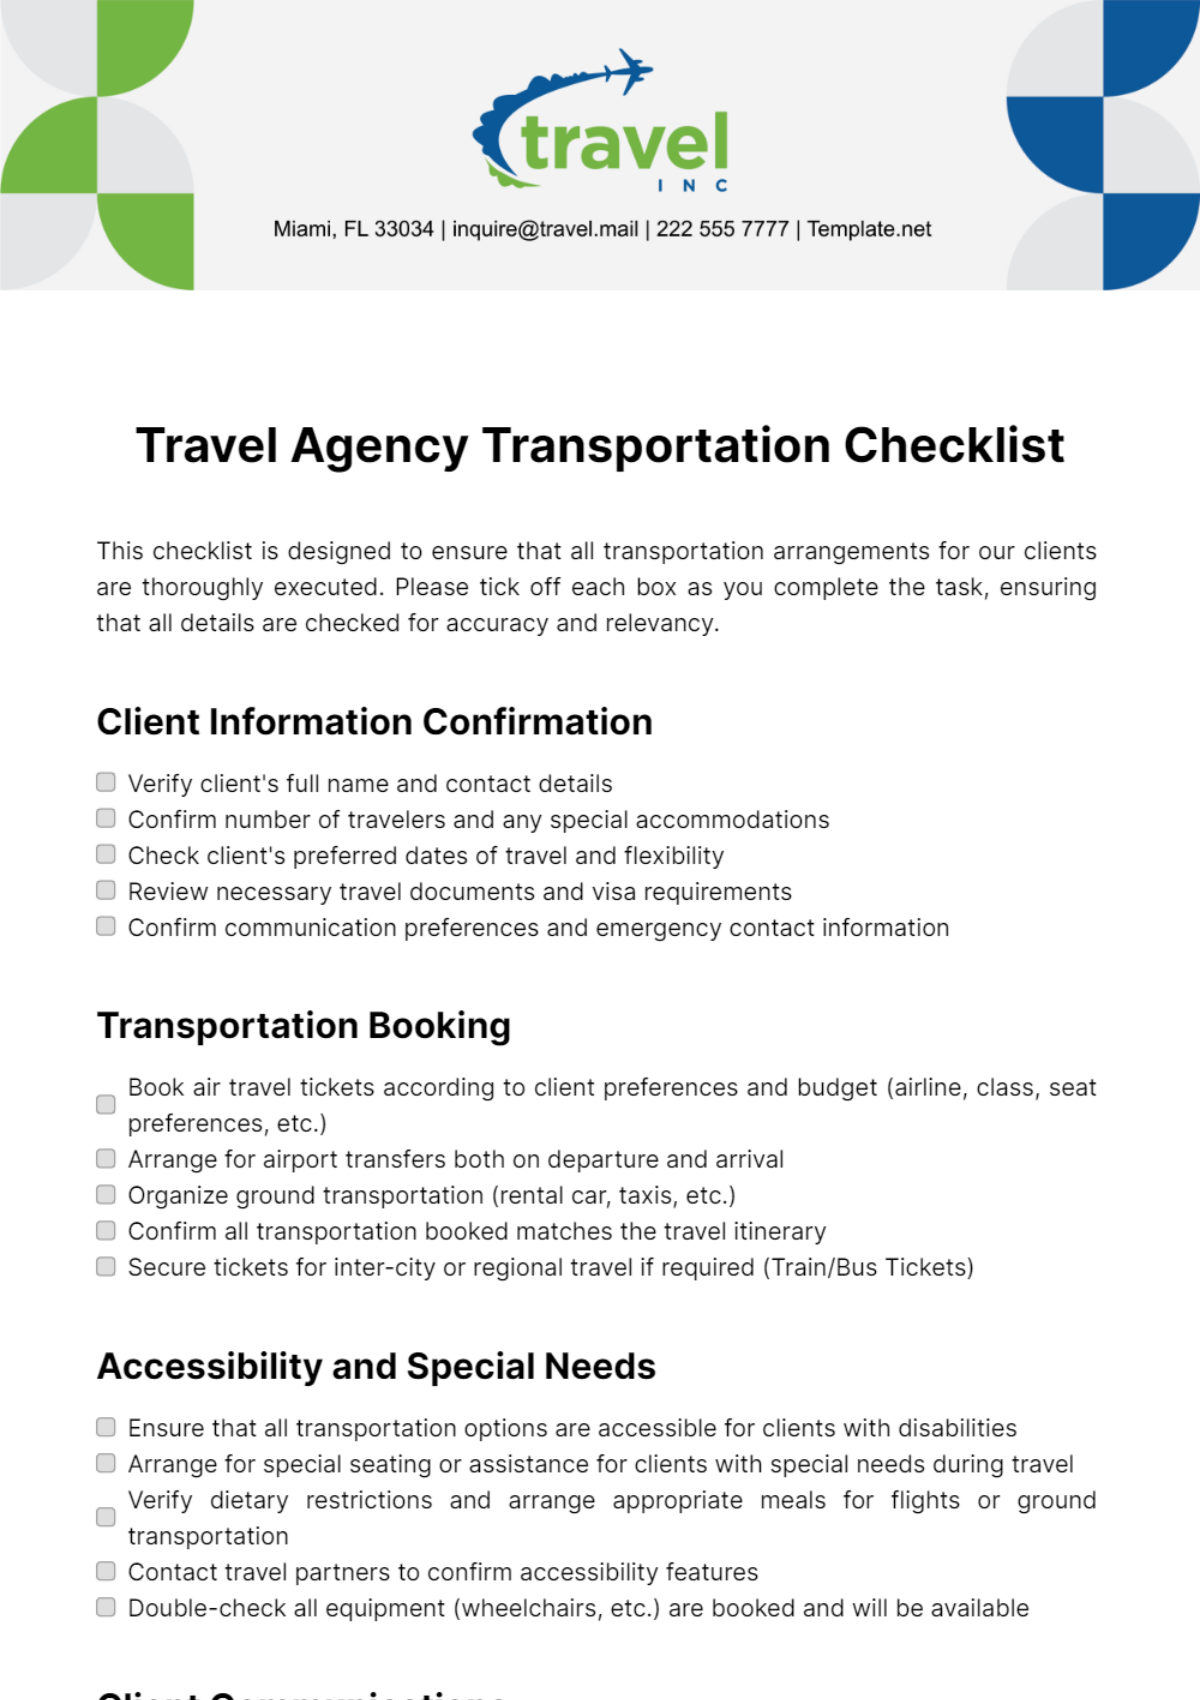 Travel Agency Transportation Checklist Template